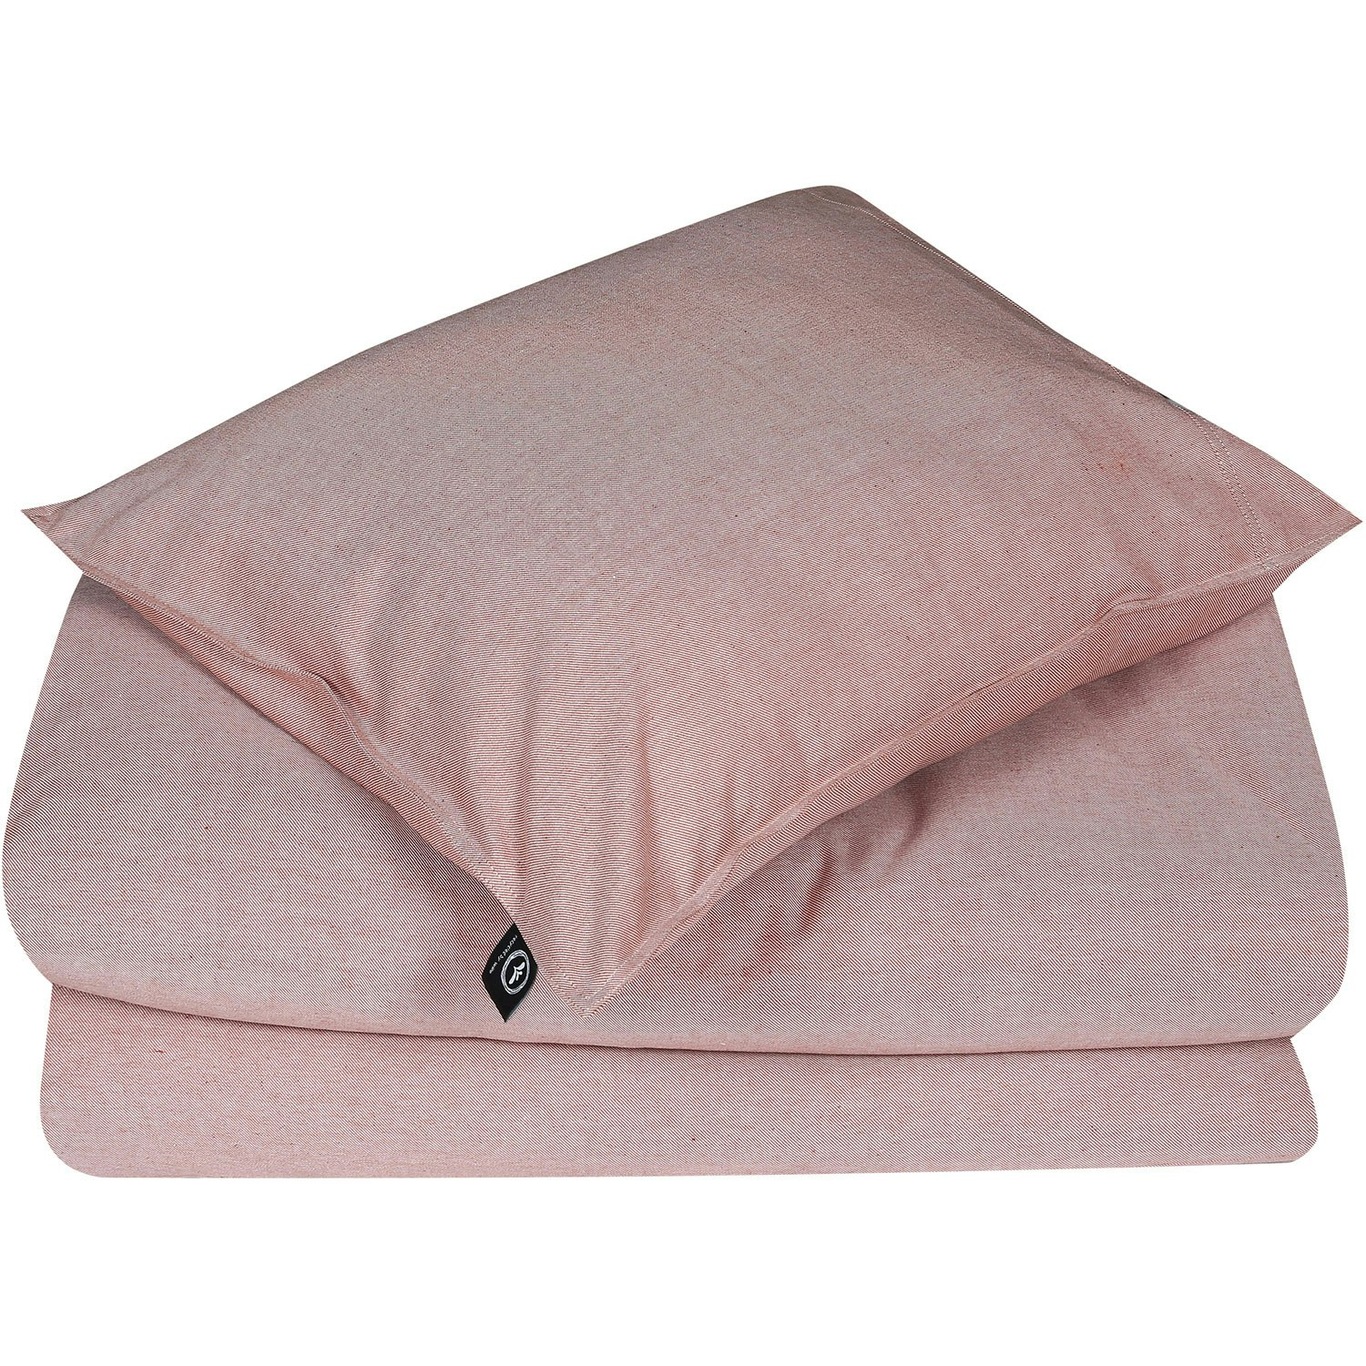 Estelle Pillowcase 50x60 cm, Rust/Beige